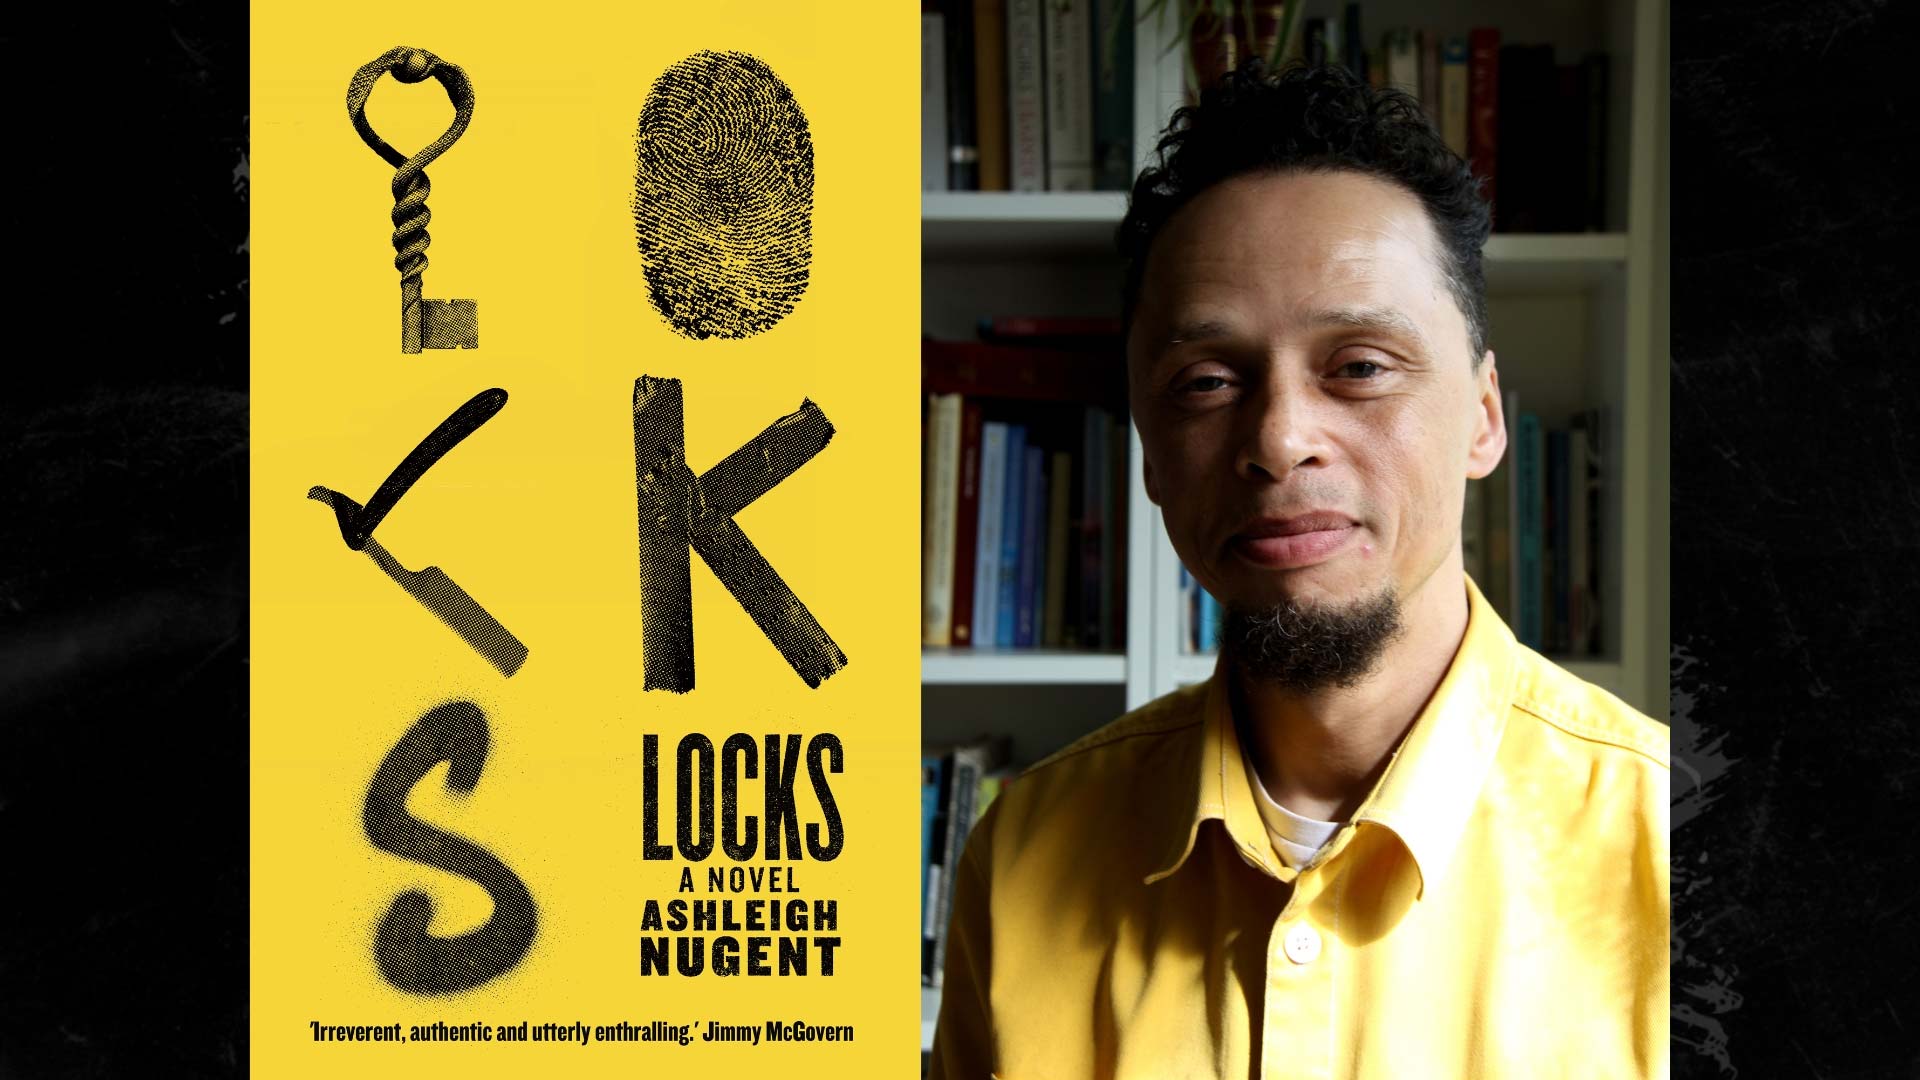 The cover of Ashleigh Nugent's novel LOCKS, alongside Nugent's headshot.